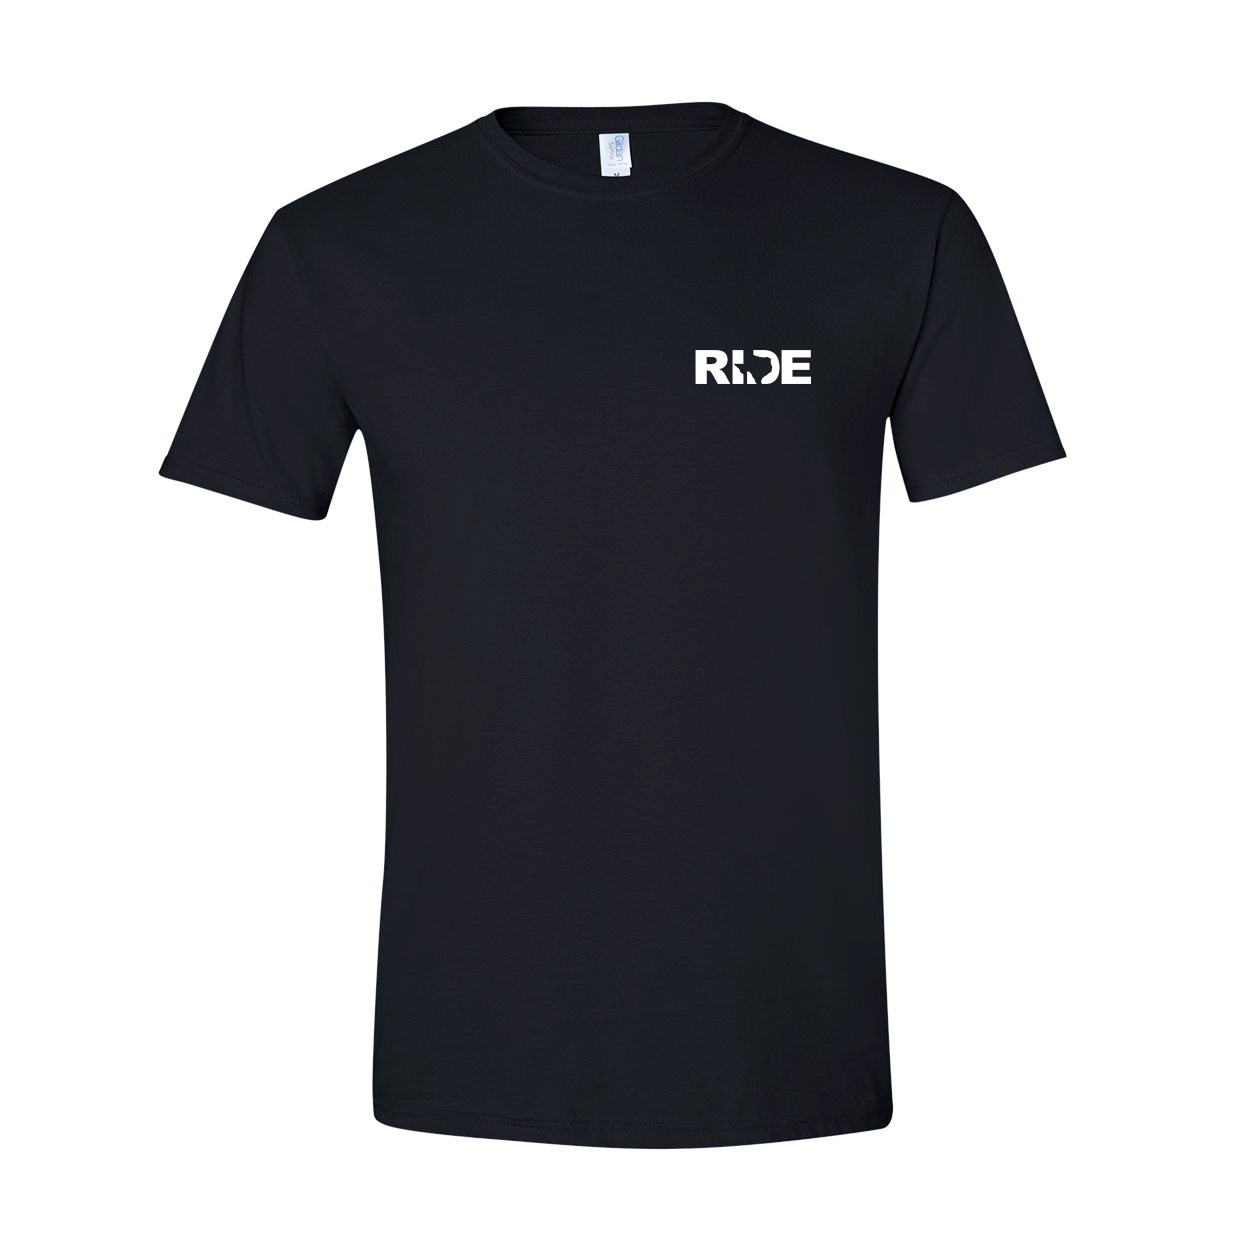 Ride Texas Night Out T-Shirt Black (White Logo)